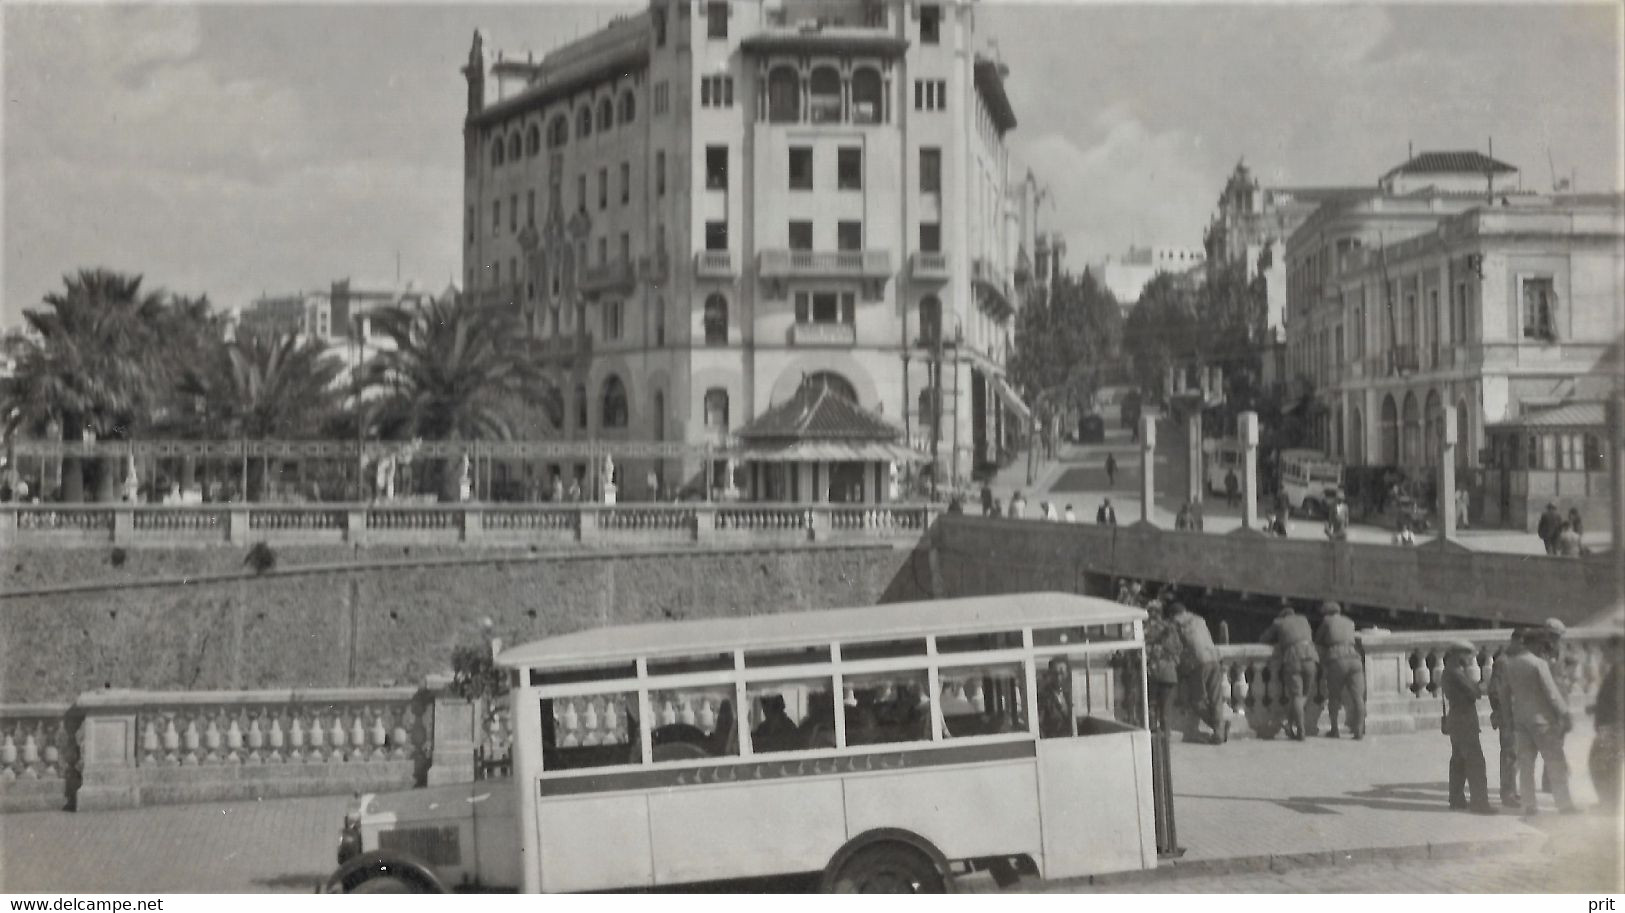 Edificio Trujillo Vintage Buses Ceuta Street View Spanish Africa ~1925 Rare Unused Photo Postcard. - Ceuta